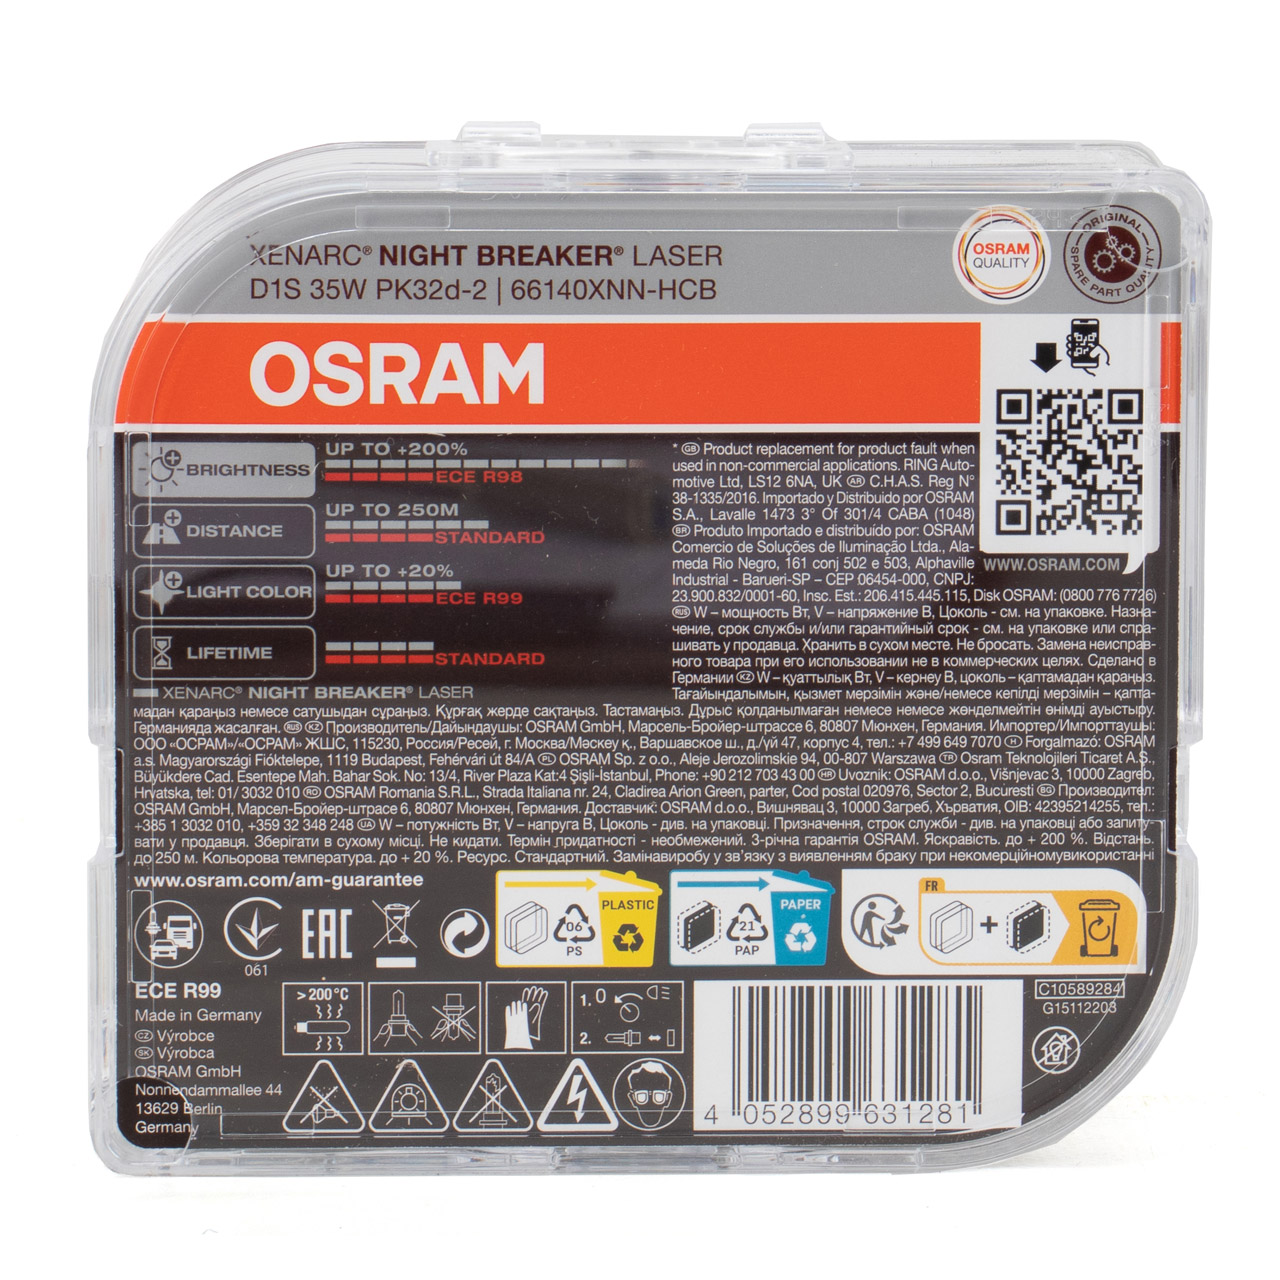 2x OSRAM Glühlampe D1S NIGHT BREAKER LASER 85V 35W PK32d-2 next Generation +200%